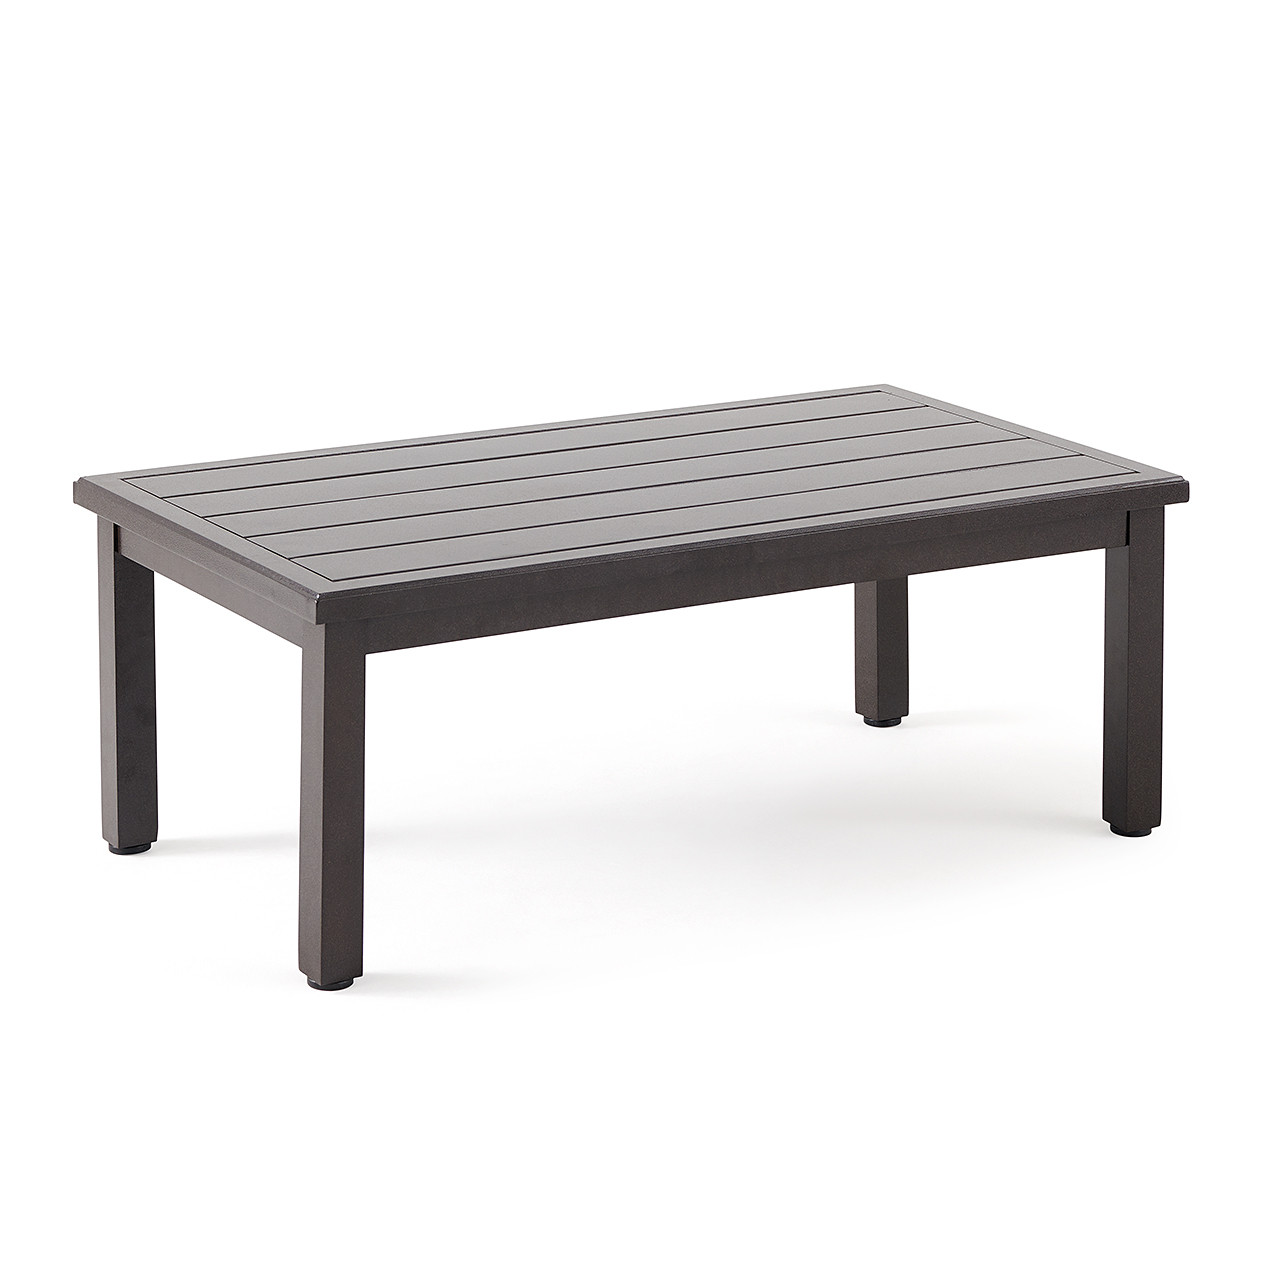 Ravello Scoria Aluminum with Cushions 3 Piece Sofa Set + 46 x 24 in. Slat Top Coffee Table